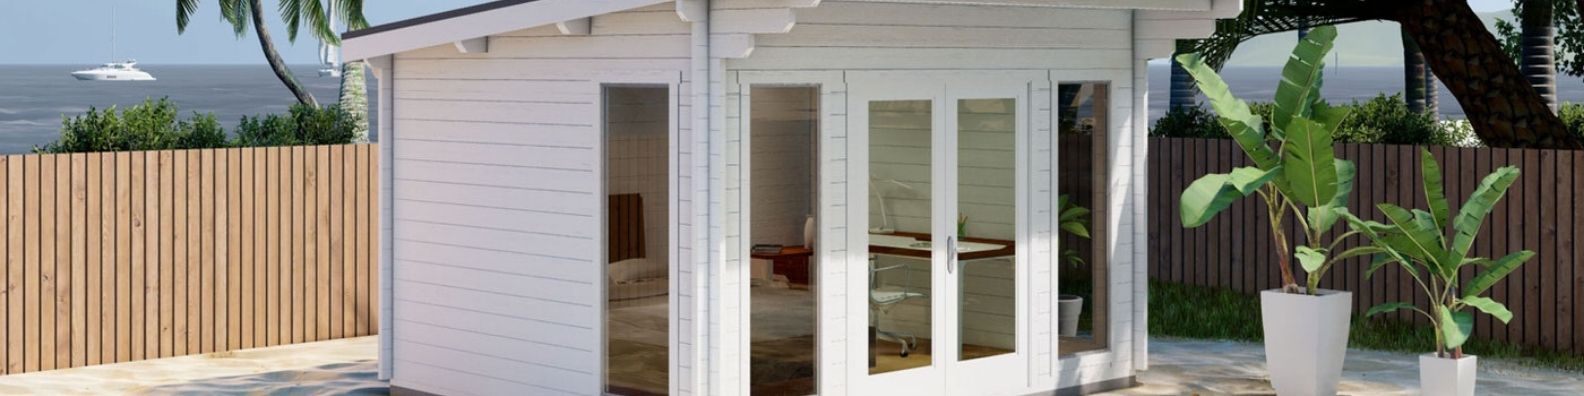 pool house, bach or weekender cabin